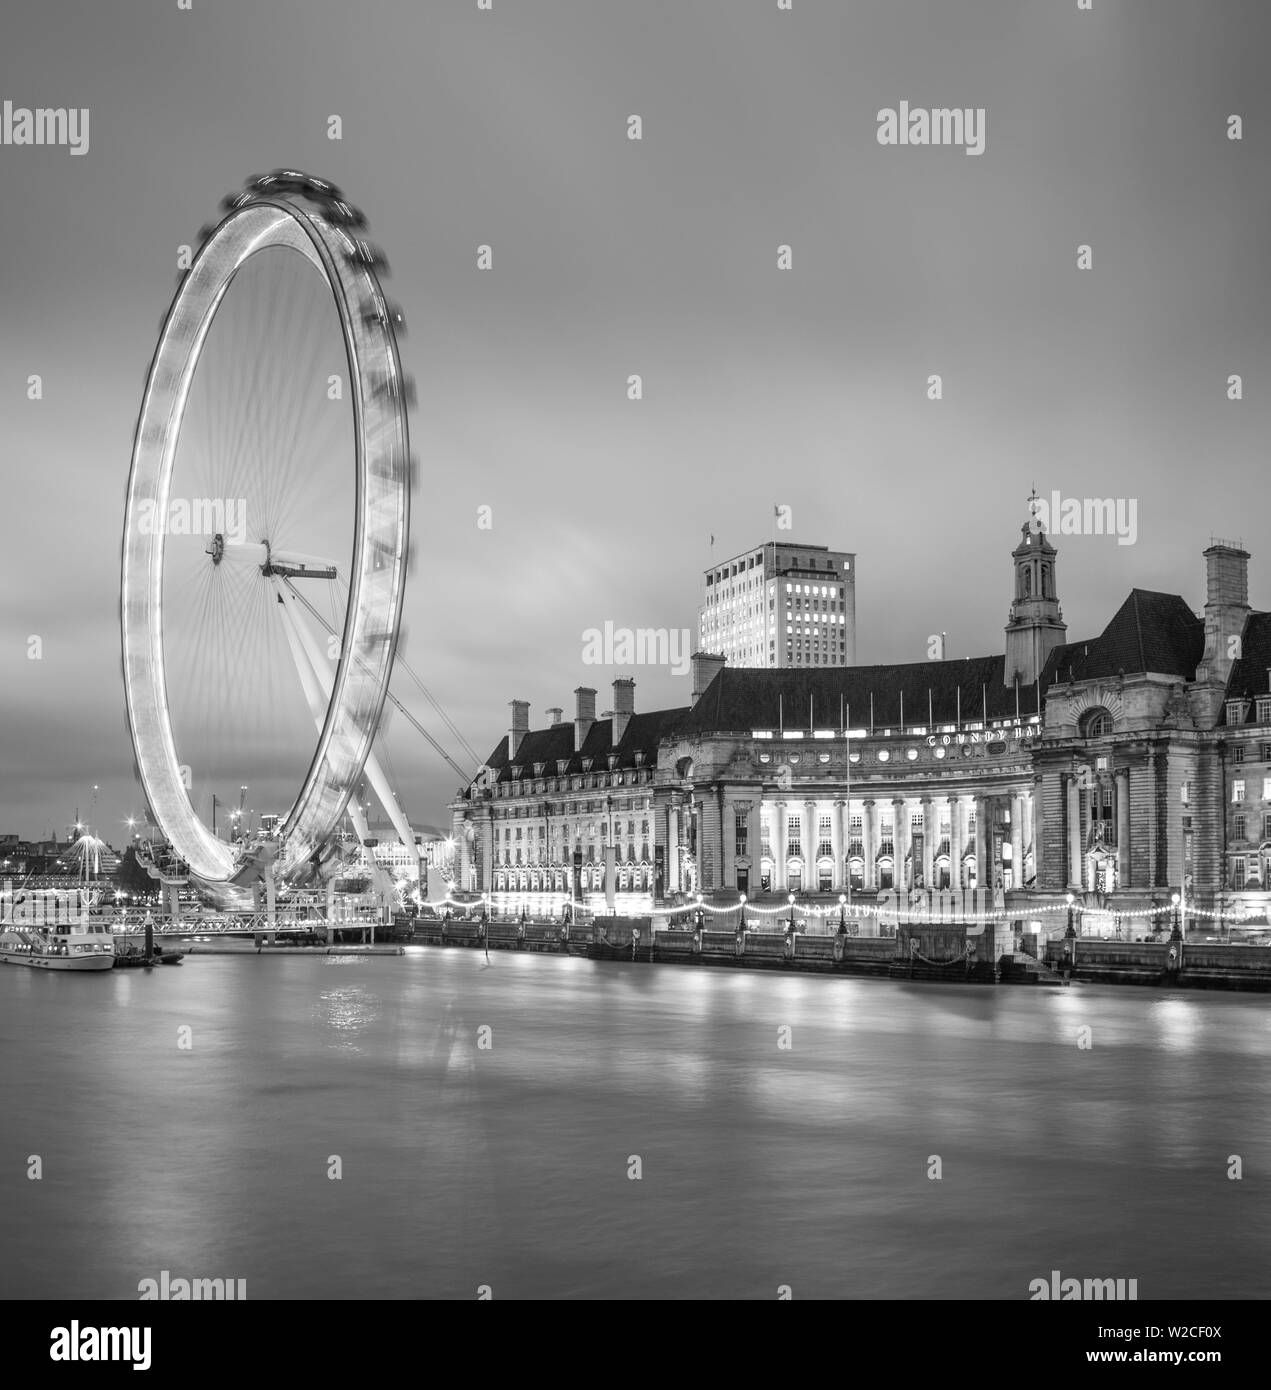 London Eye (Millennium Wheel) and former County Hall, South Bank, London, England Stock Photo